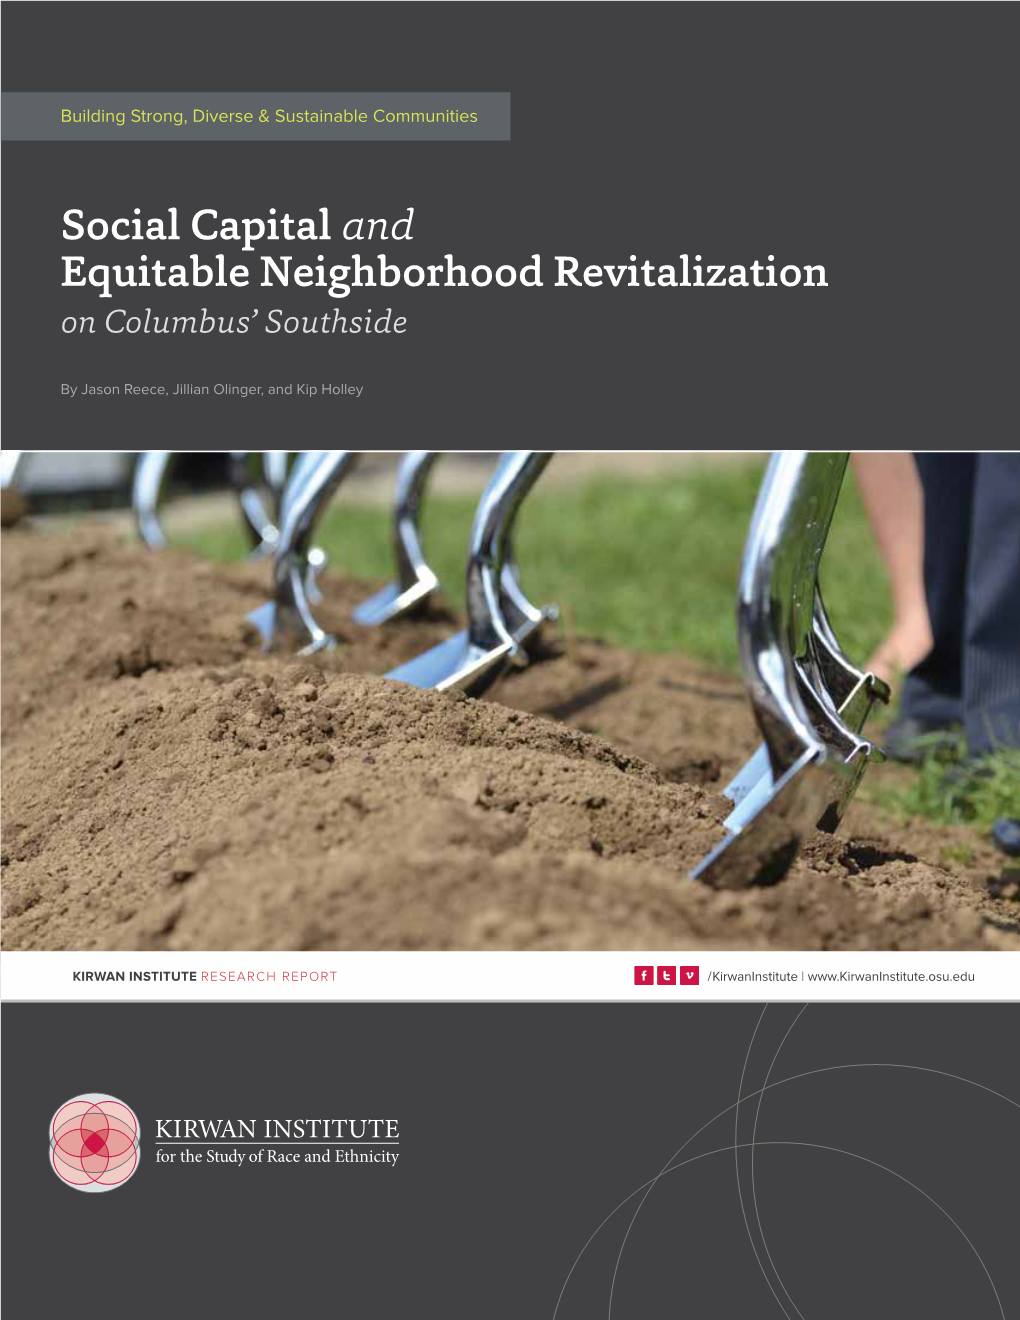 Social Capital and Equitable Neighborhood Revitalization on Columbus’ Southside